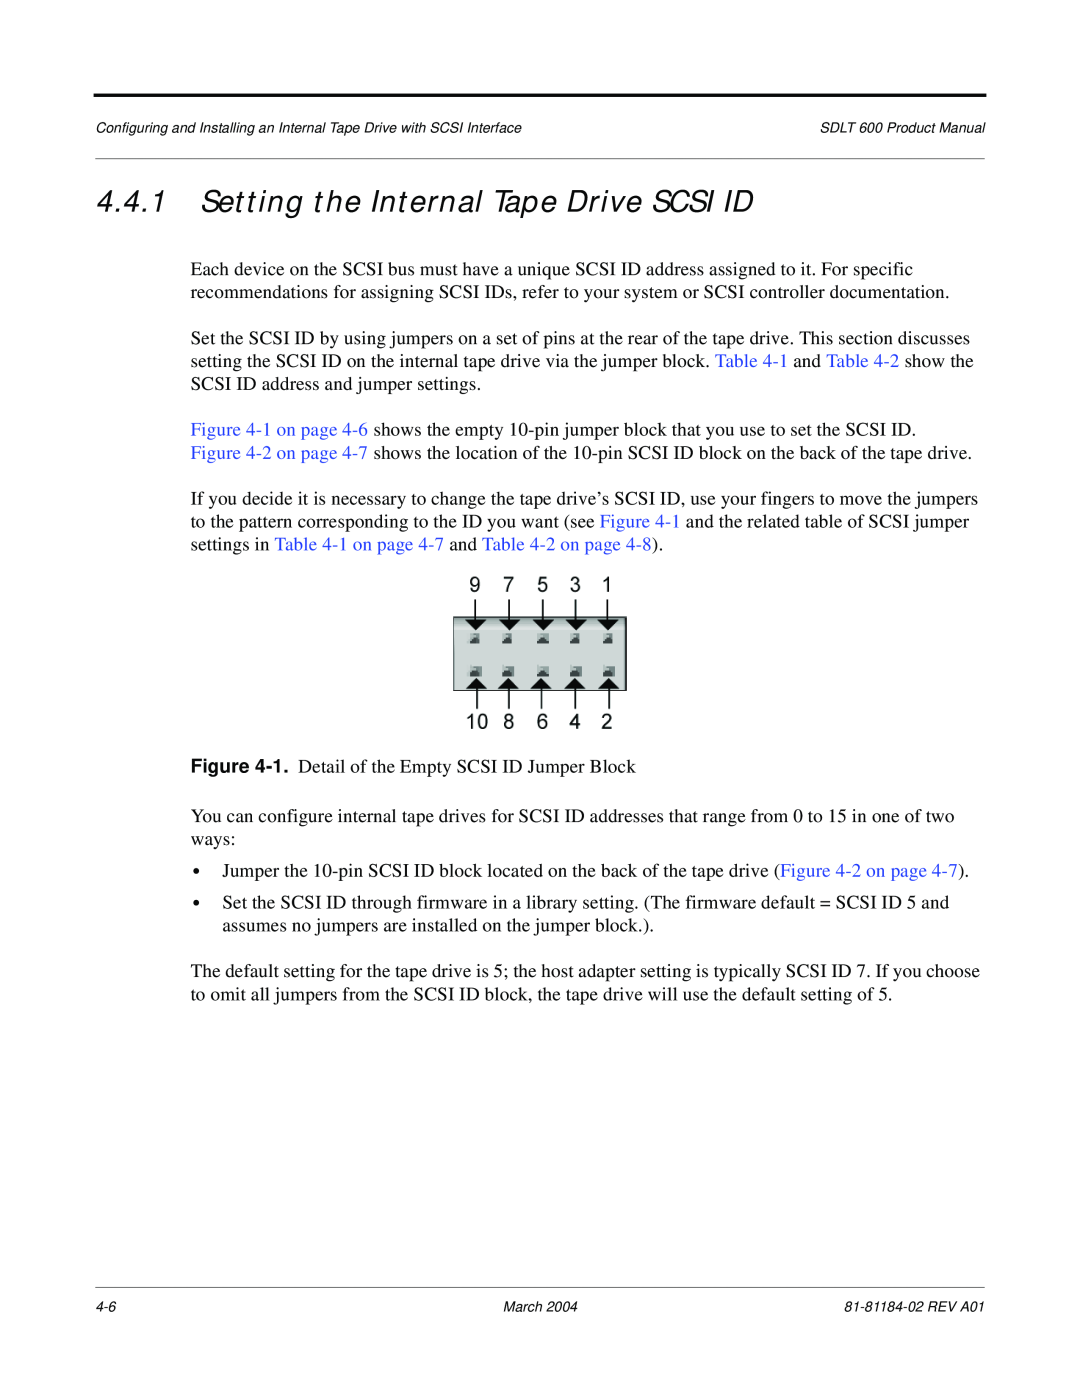 Tandberg Data 600 manual Setting the Internal Tape Drive SCSI ID 